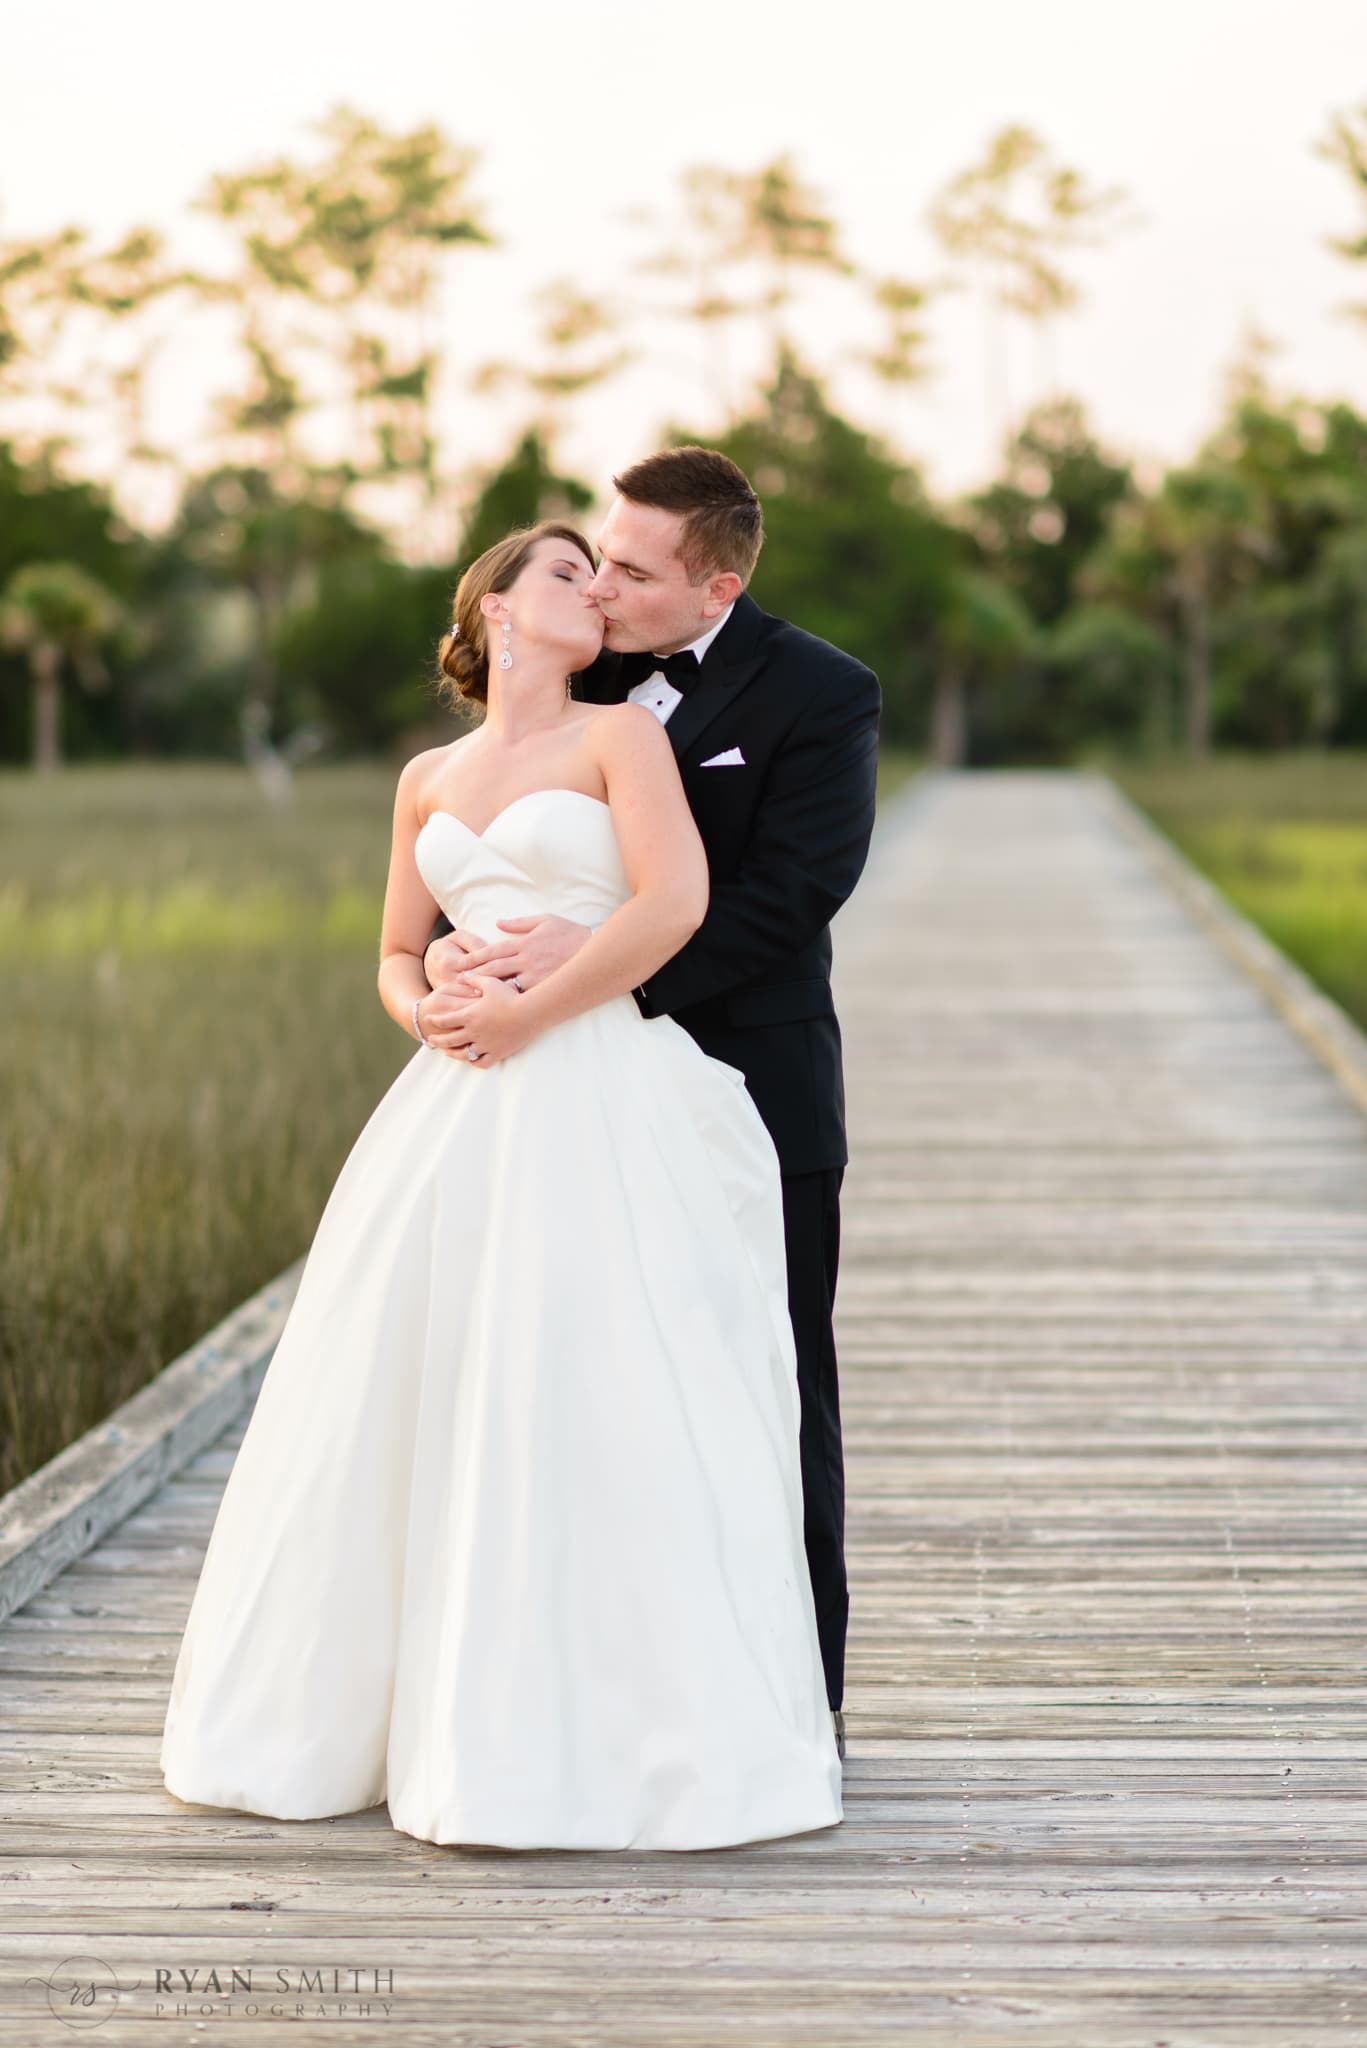 Portraits of the bride and groom at sunset on the marsh boardwalk - Daniel Island Club - Charleston, SC